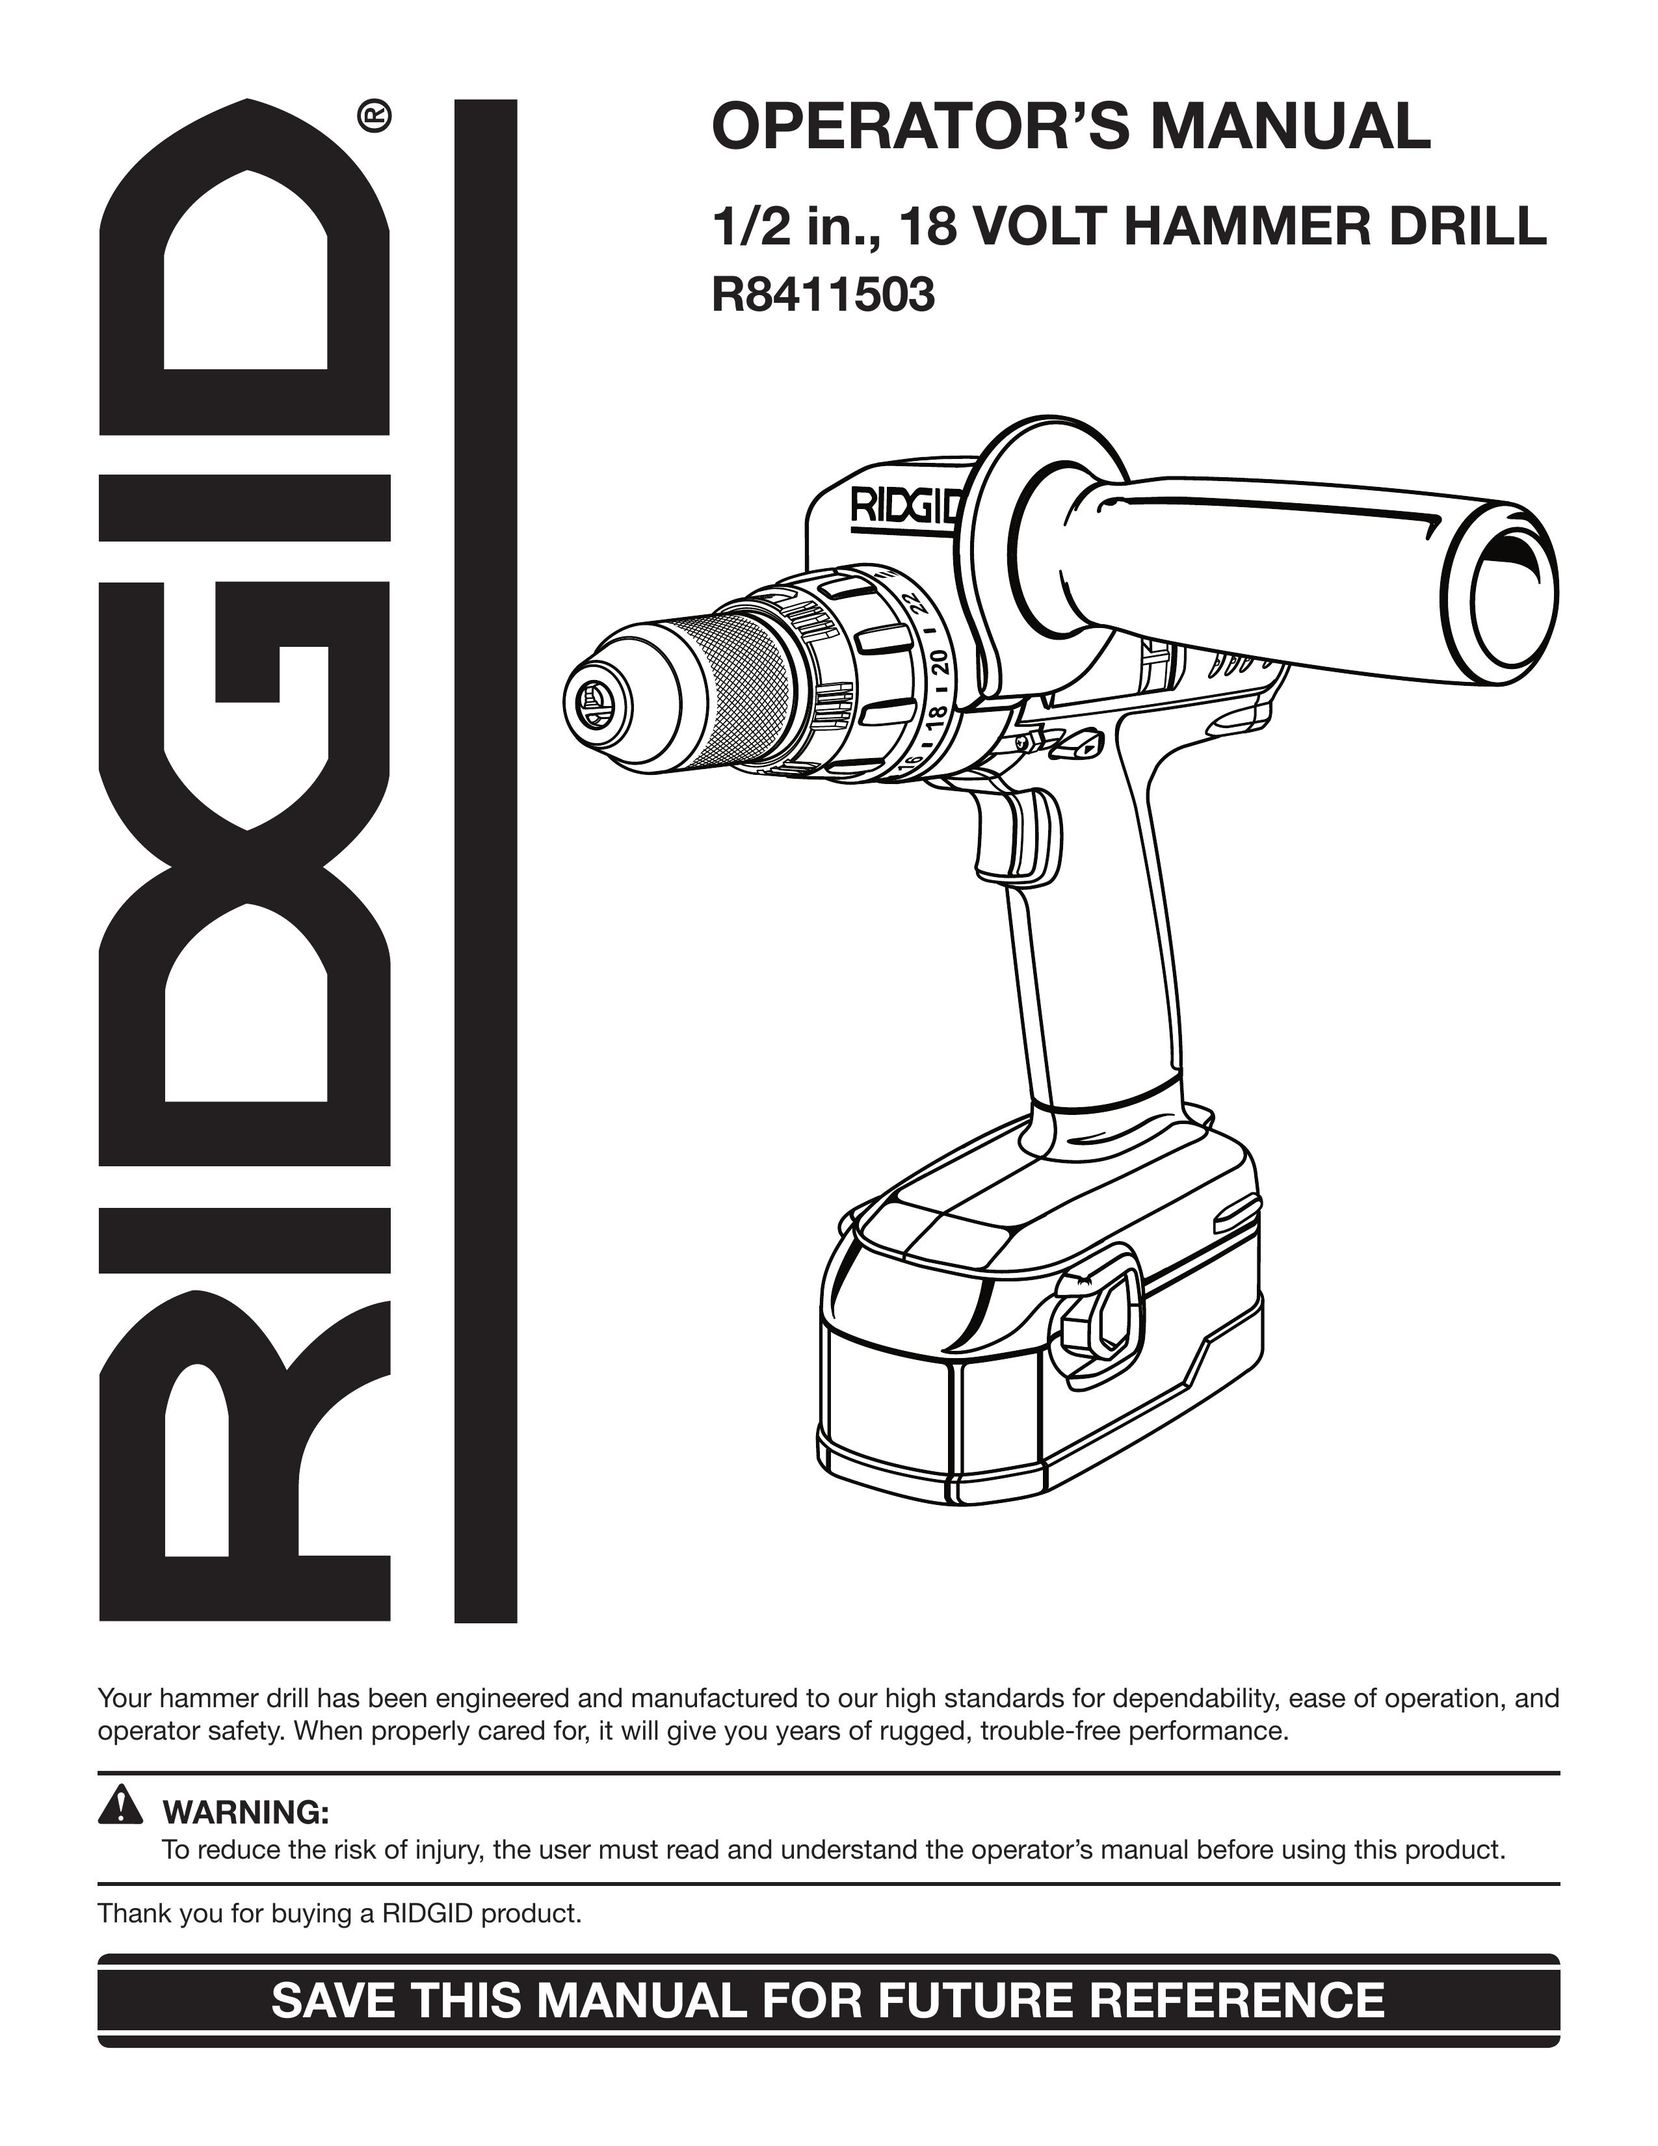 RIDGID R8411503 Drill User Manual